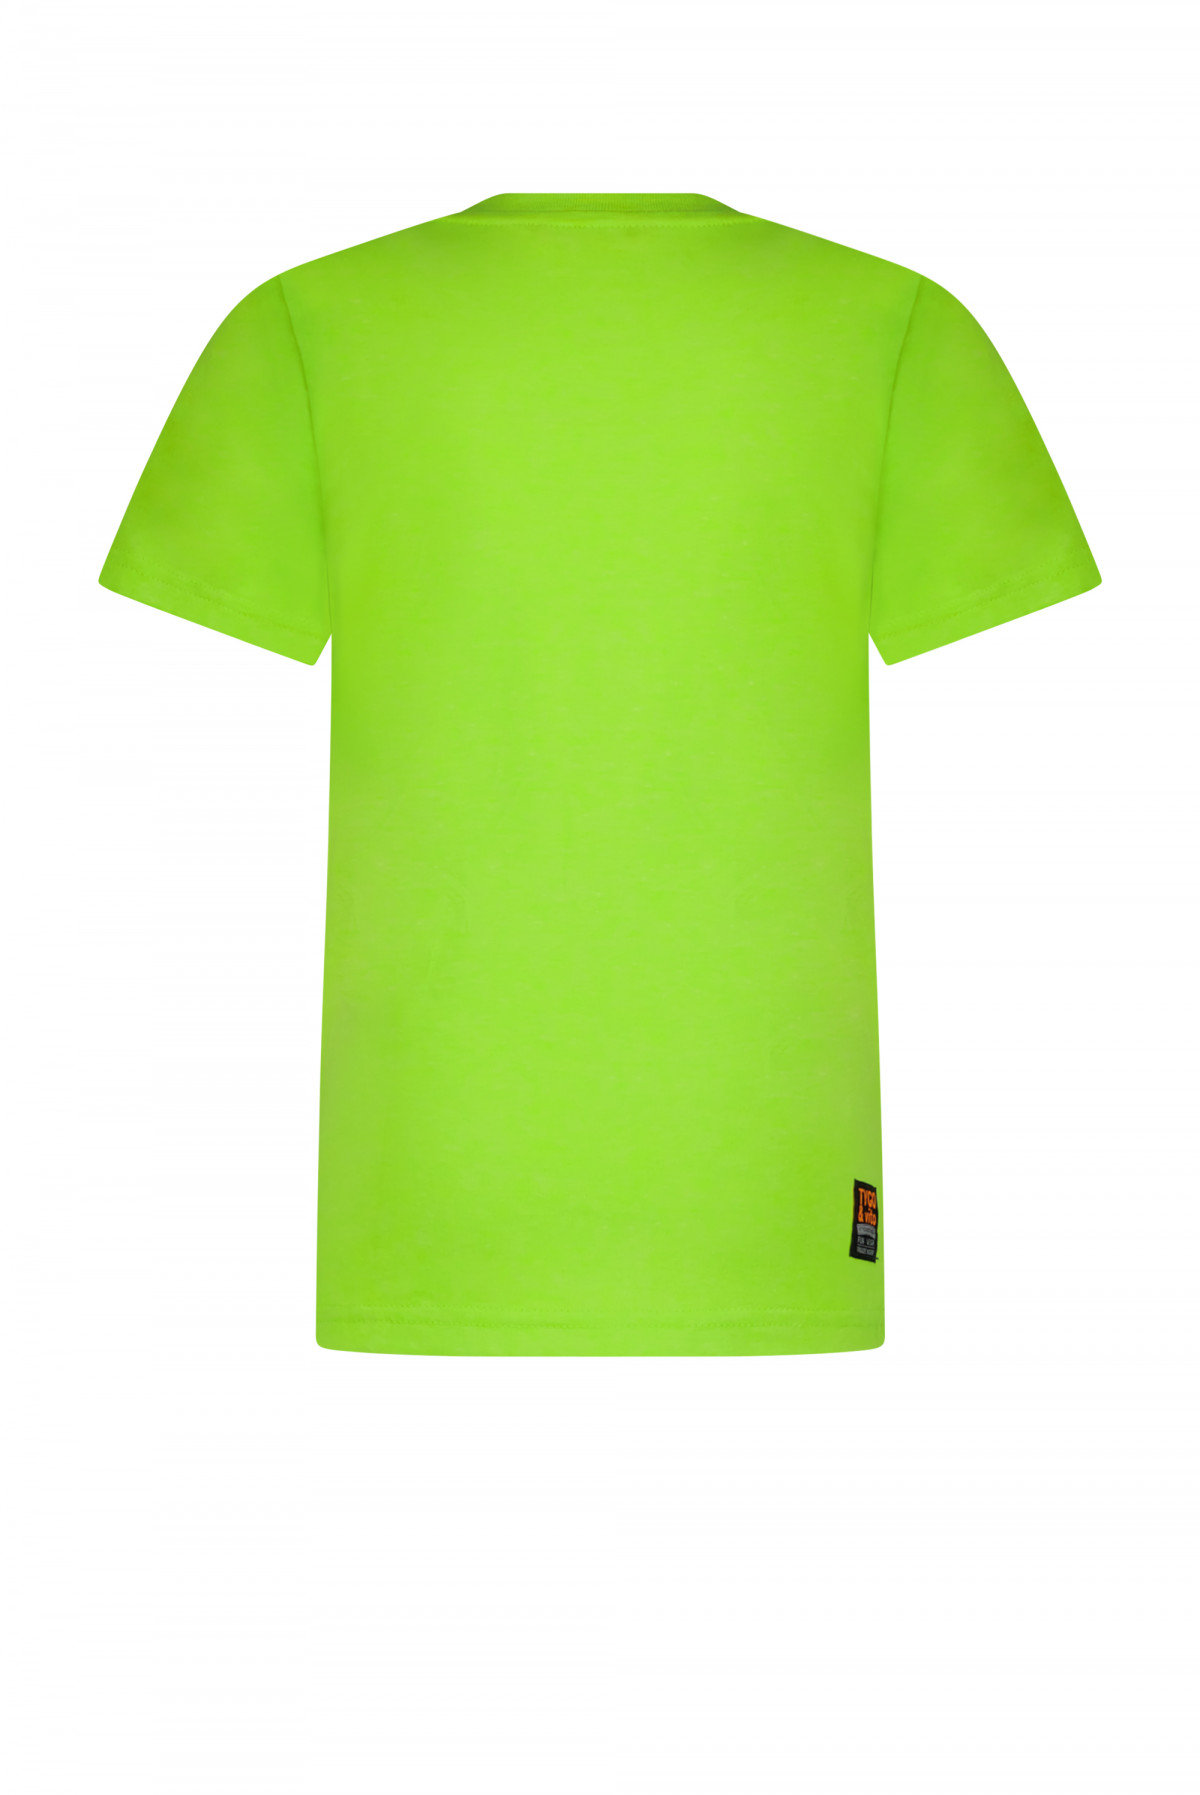 T-shirt vert - Enjoy the ride - Boutique Toup'tibou - photo 7